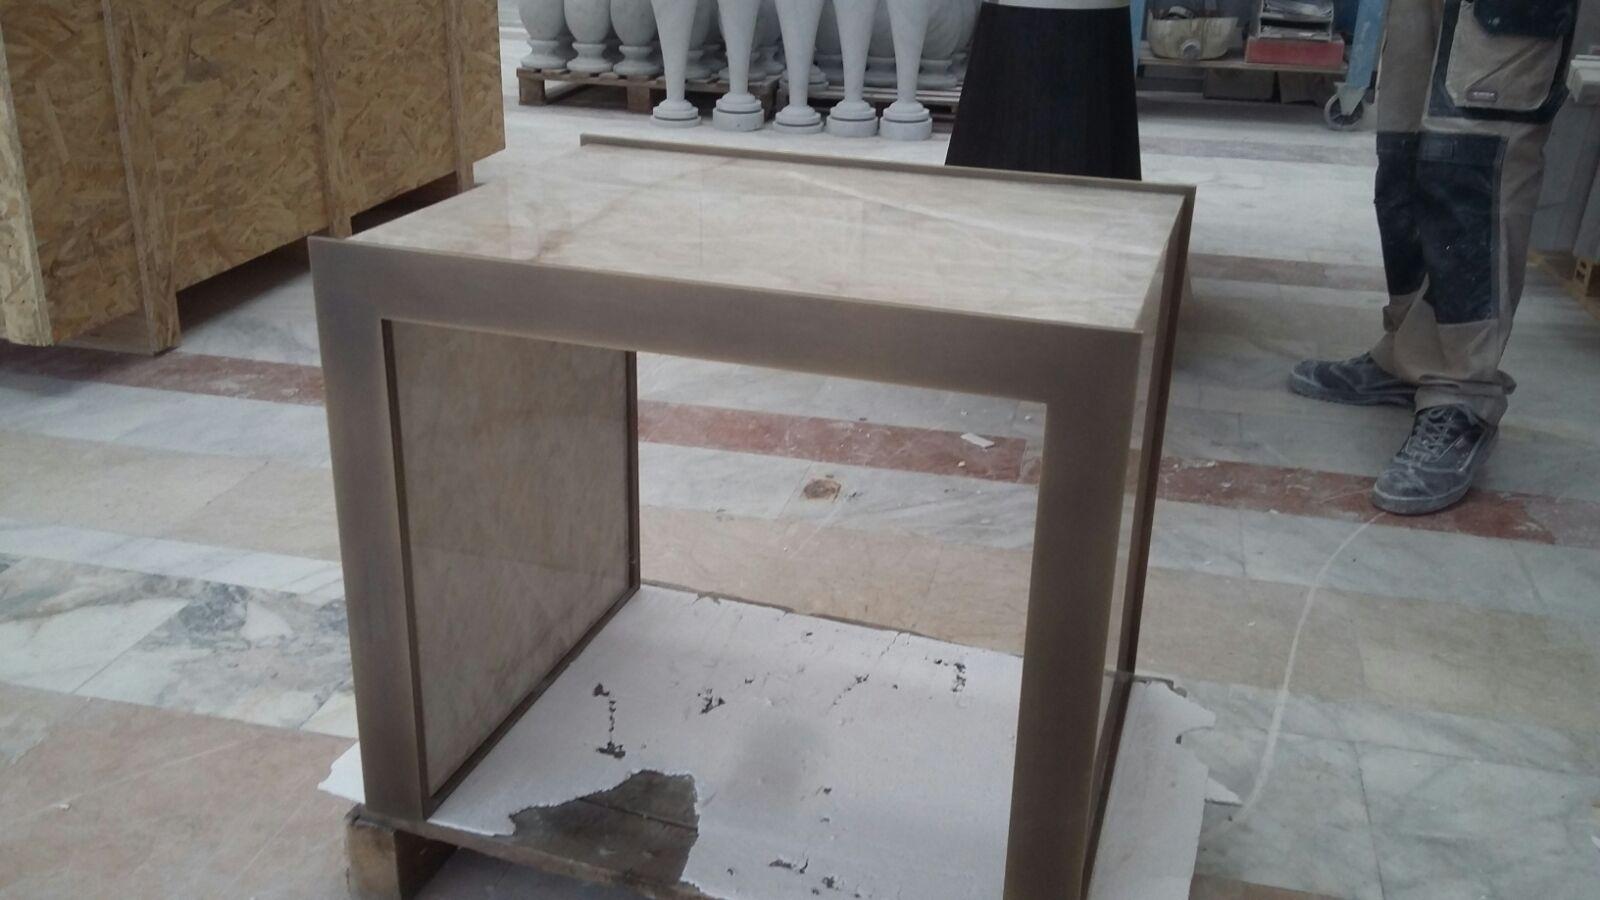 Maschi custom table in Cristallo stone and metal